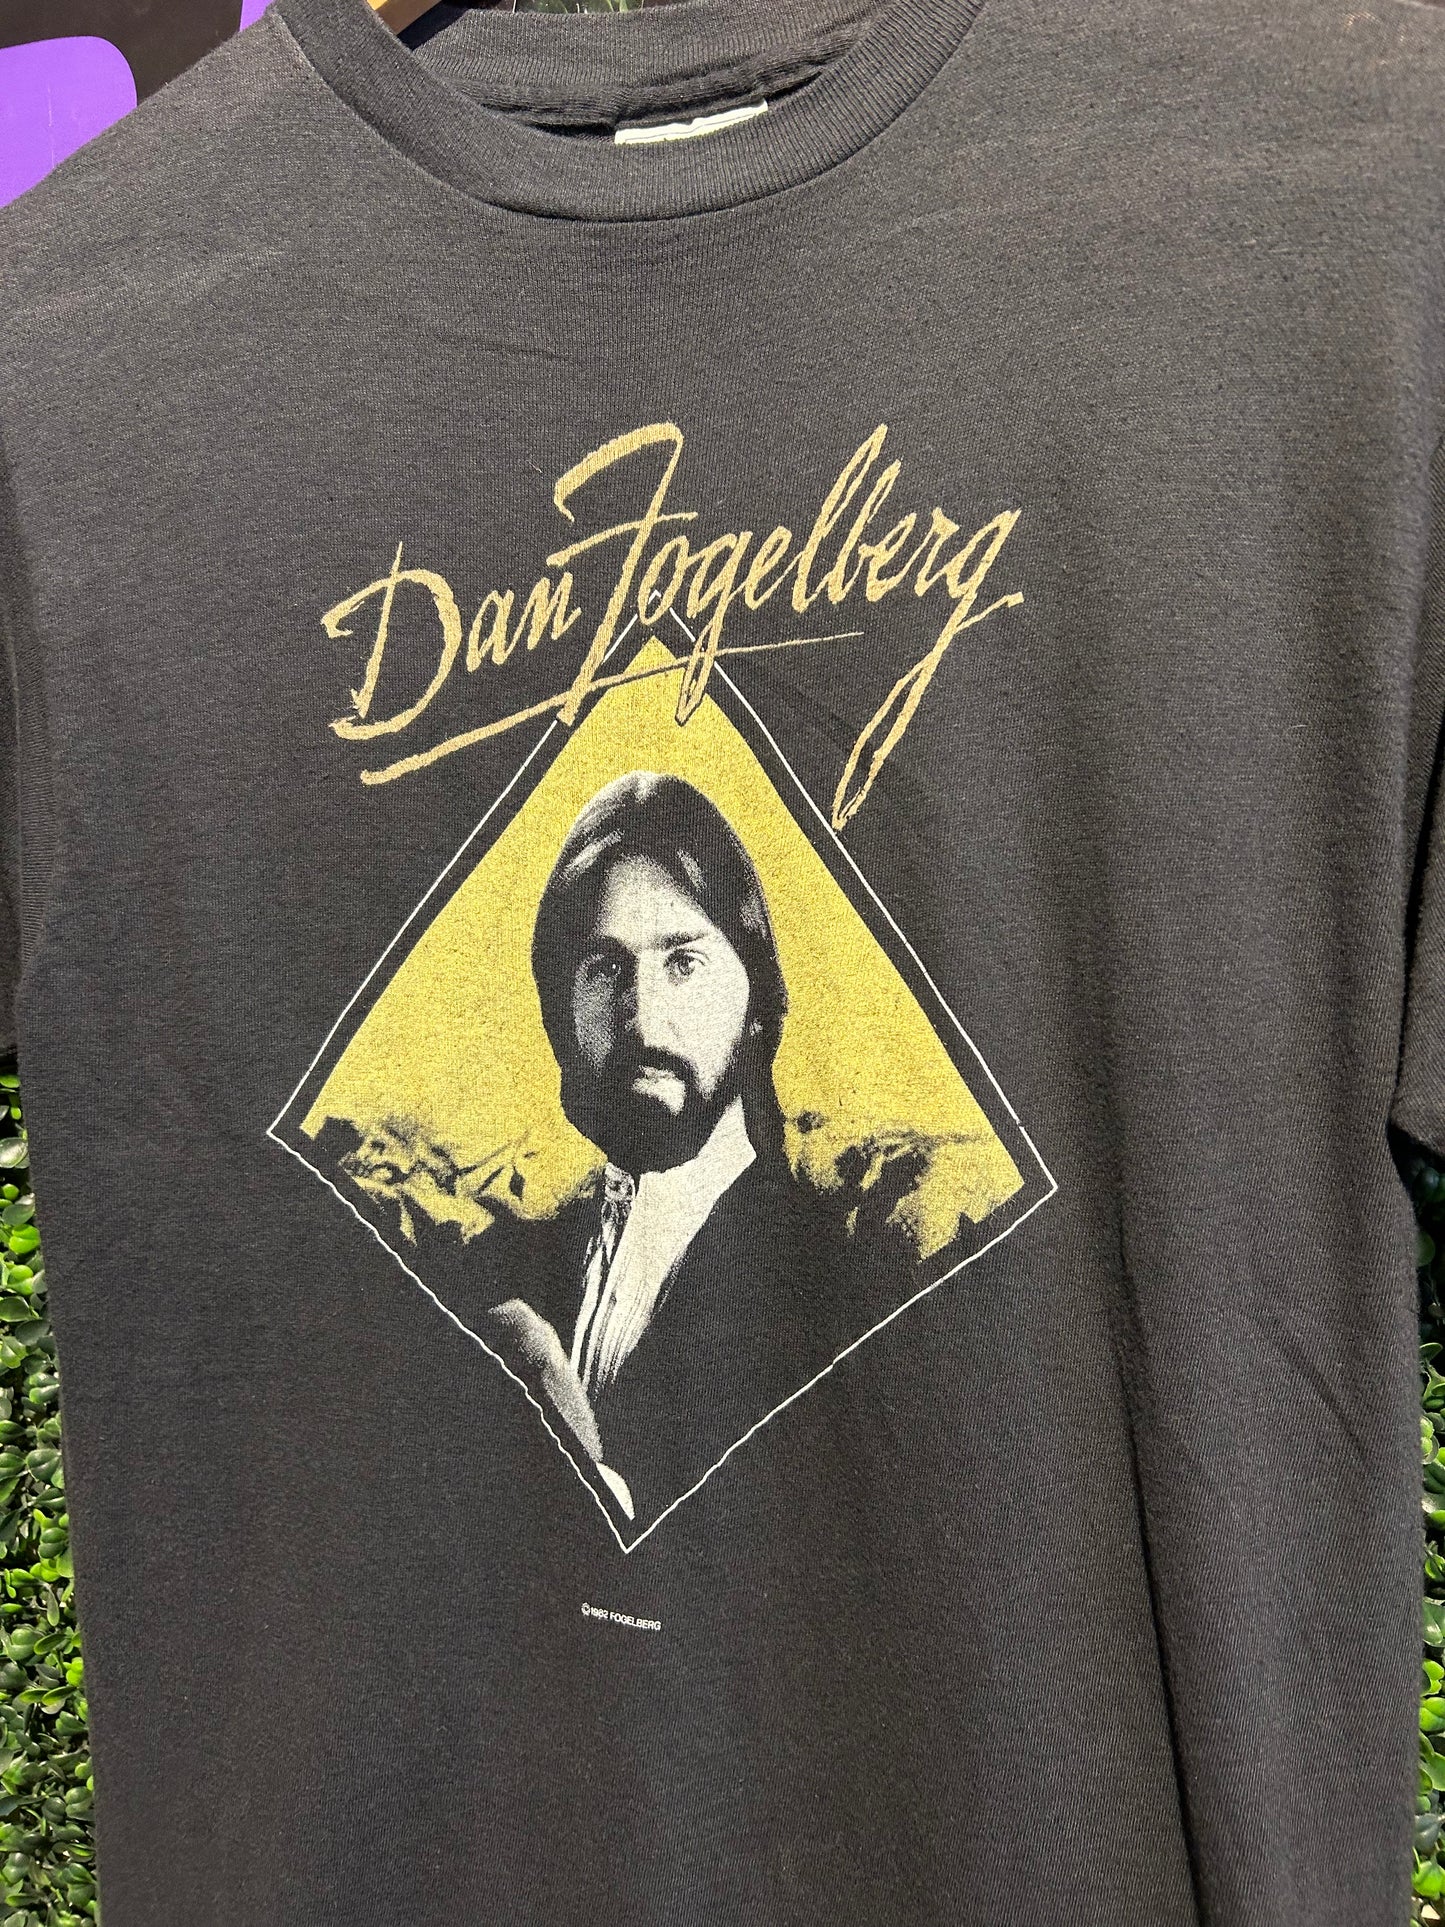 1984 Dan Fogelberg Tour T-Shirt. Size S/M